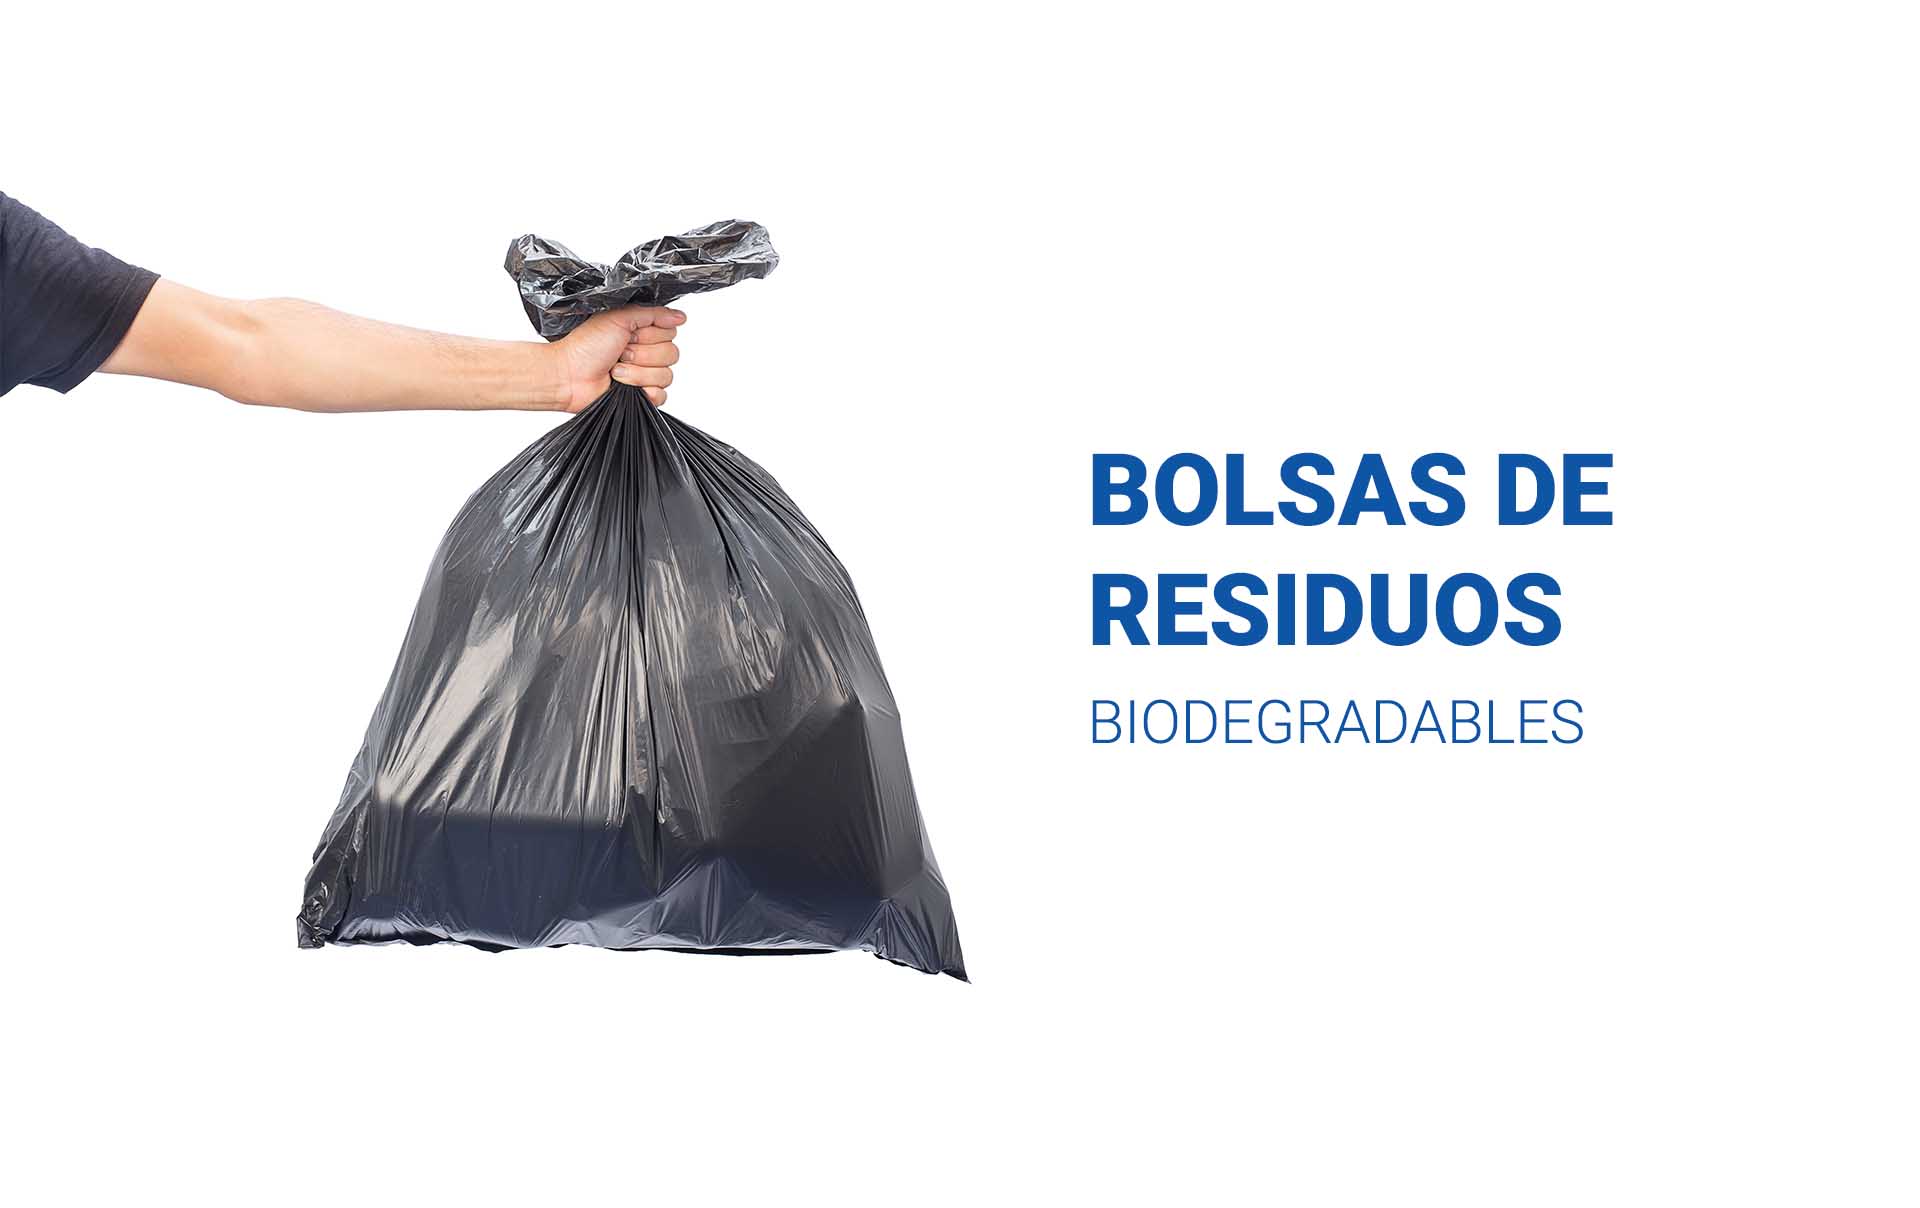 Bolsas residuos biodegradables y compostables | Papelmatic